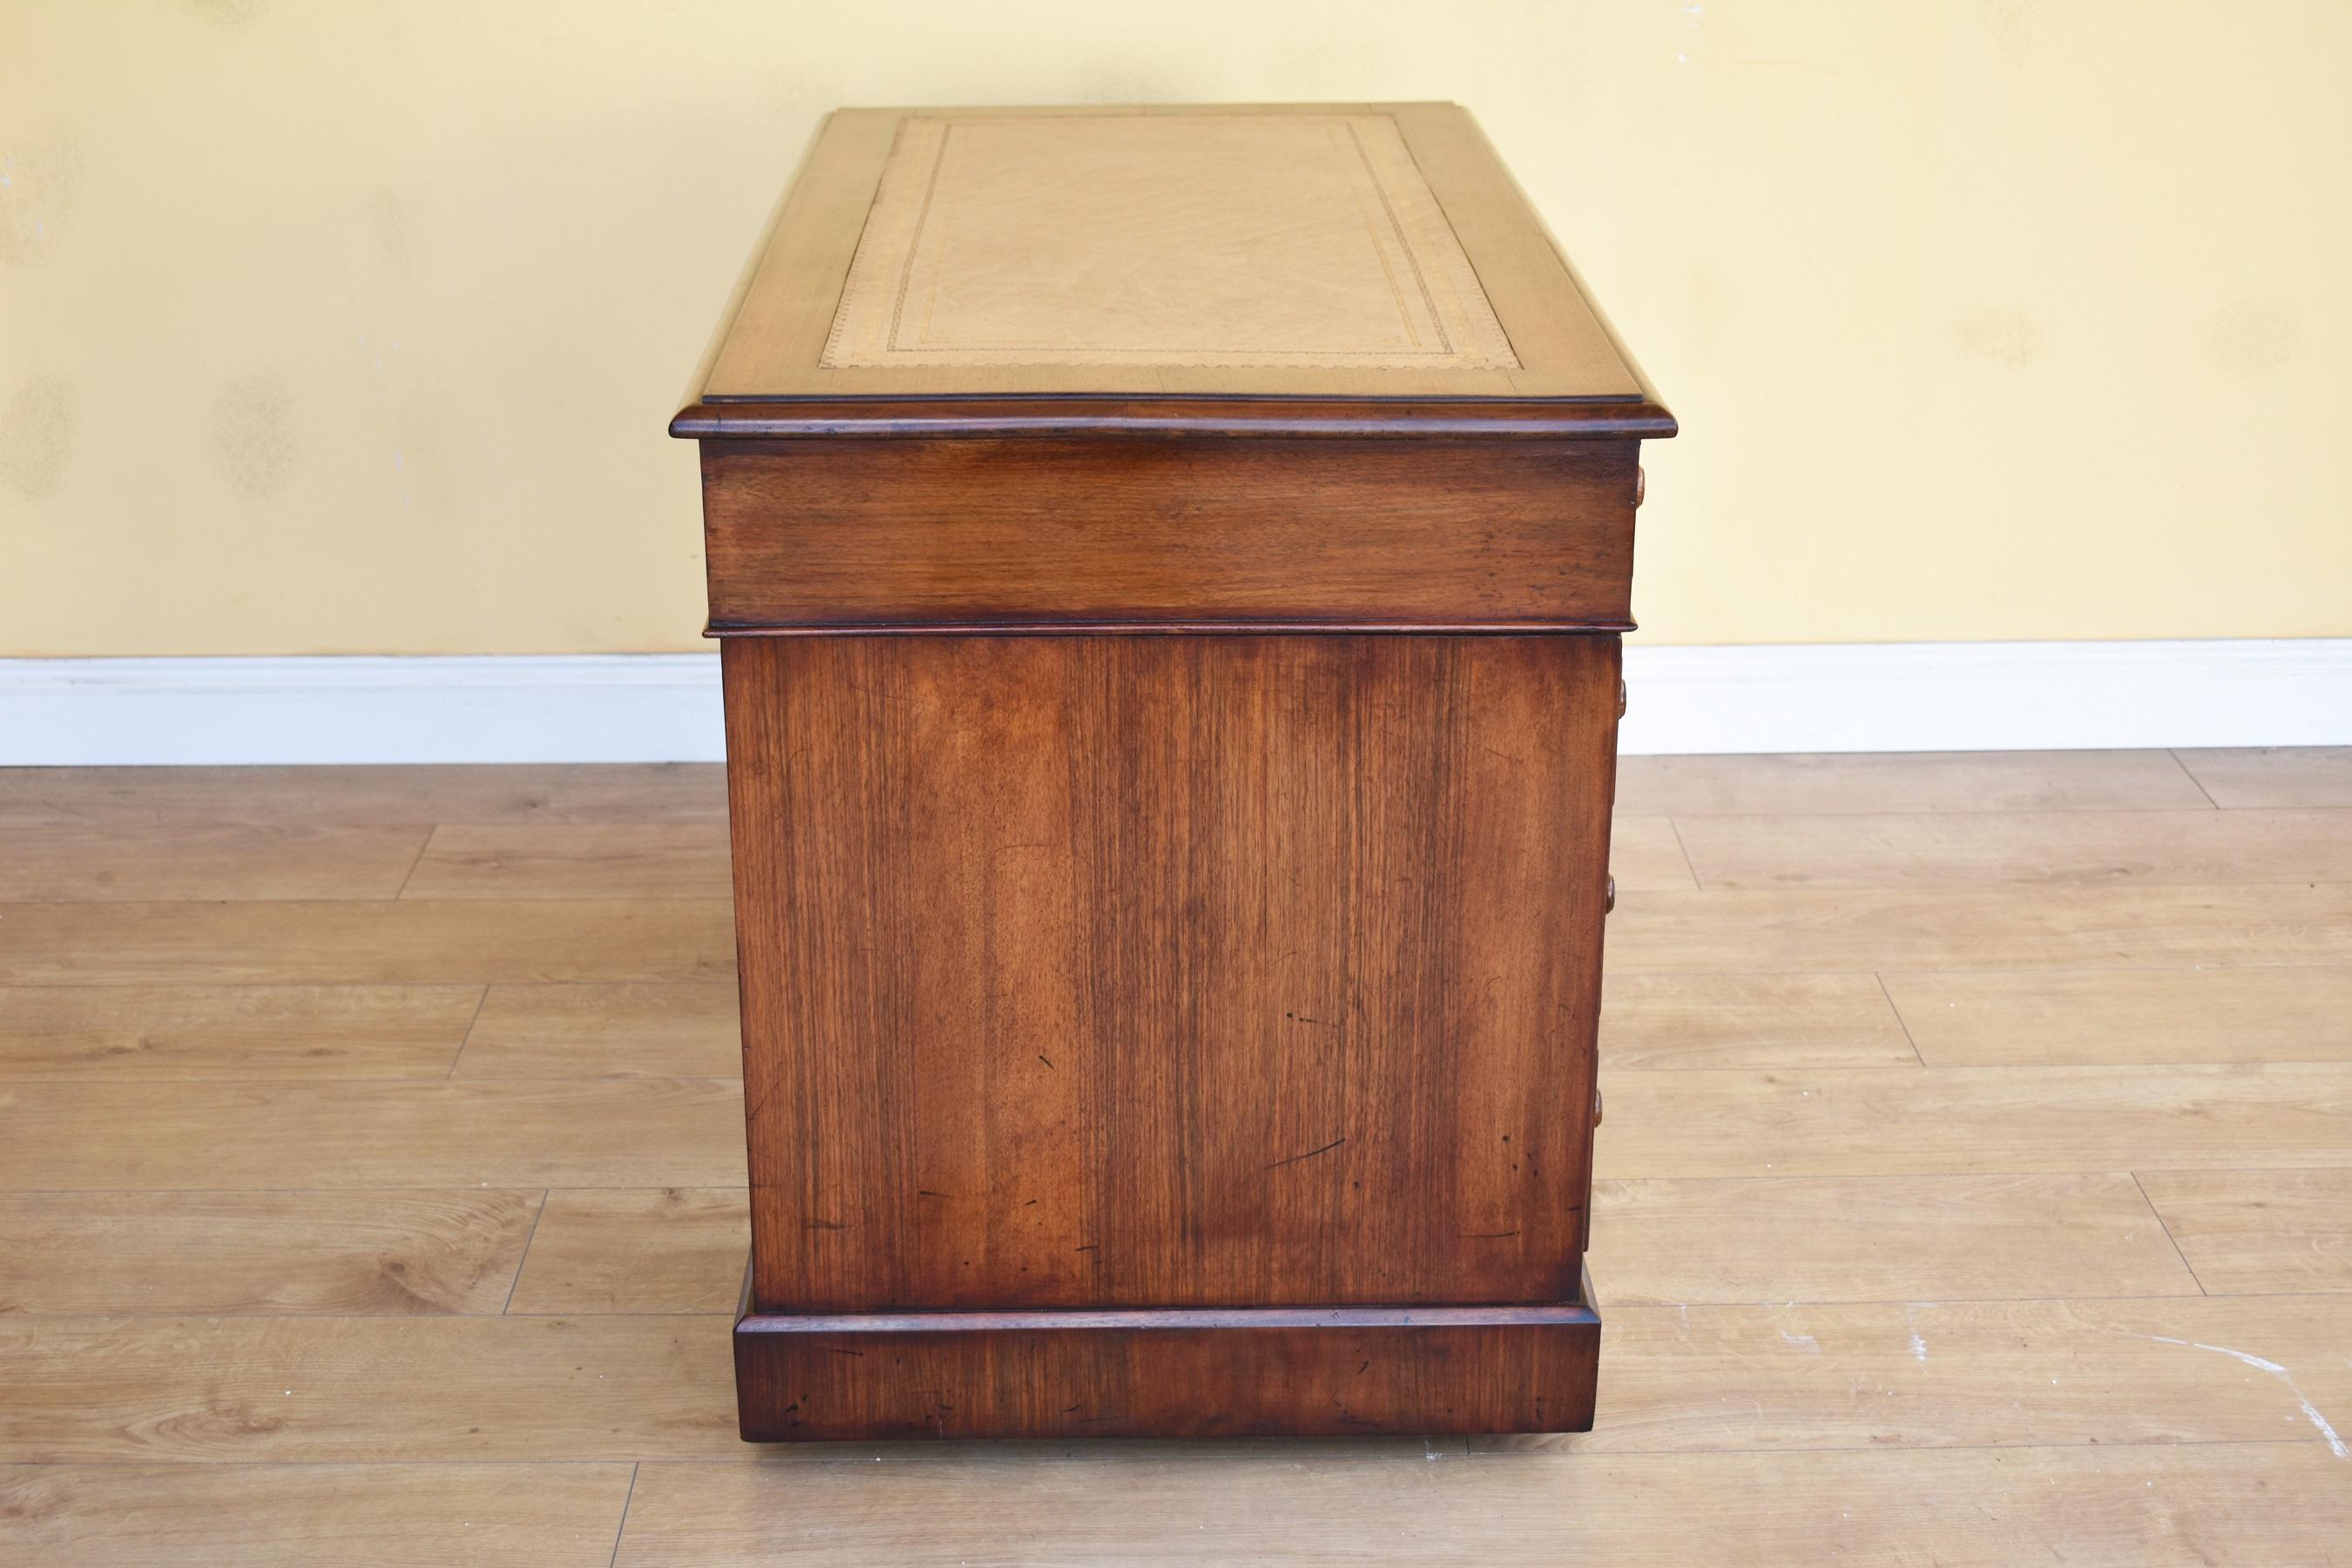 19th Century English Victorian Burr Walnut Pedestal Desk For Sale 3